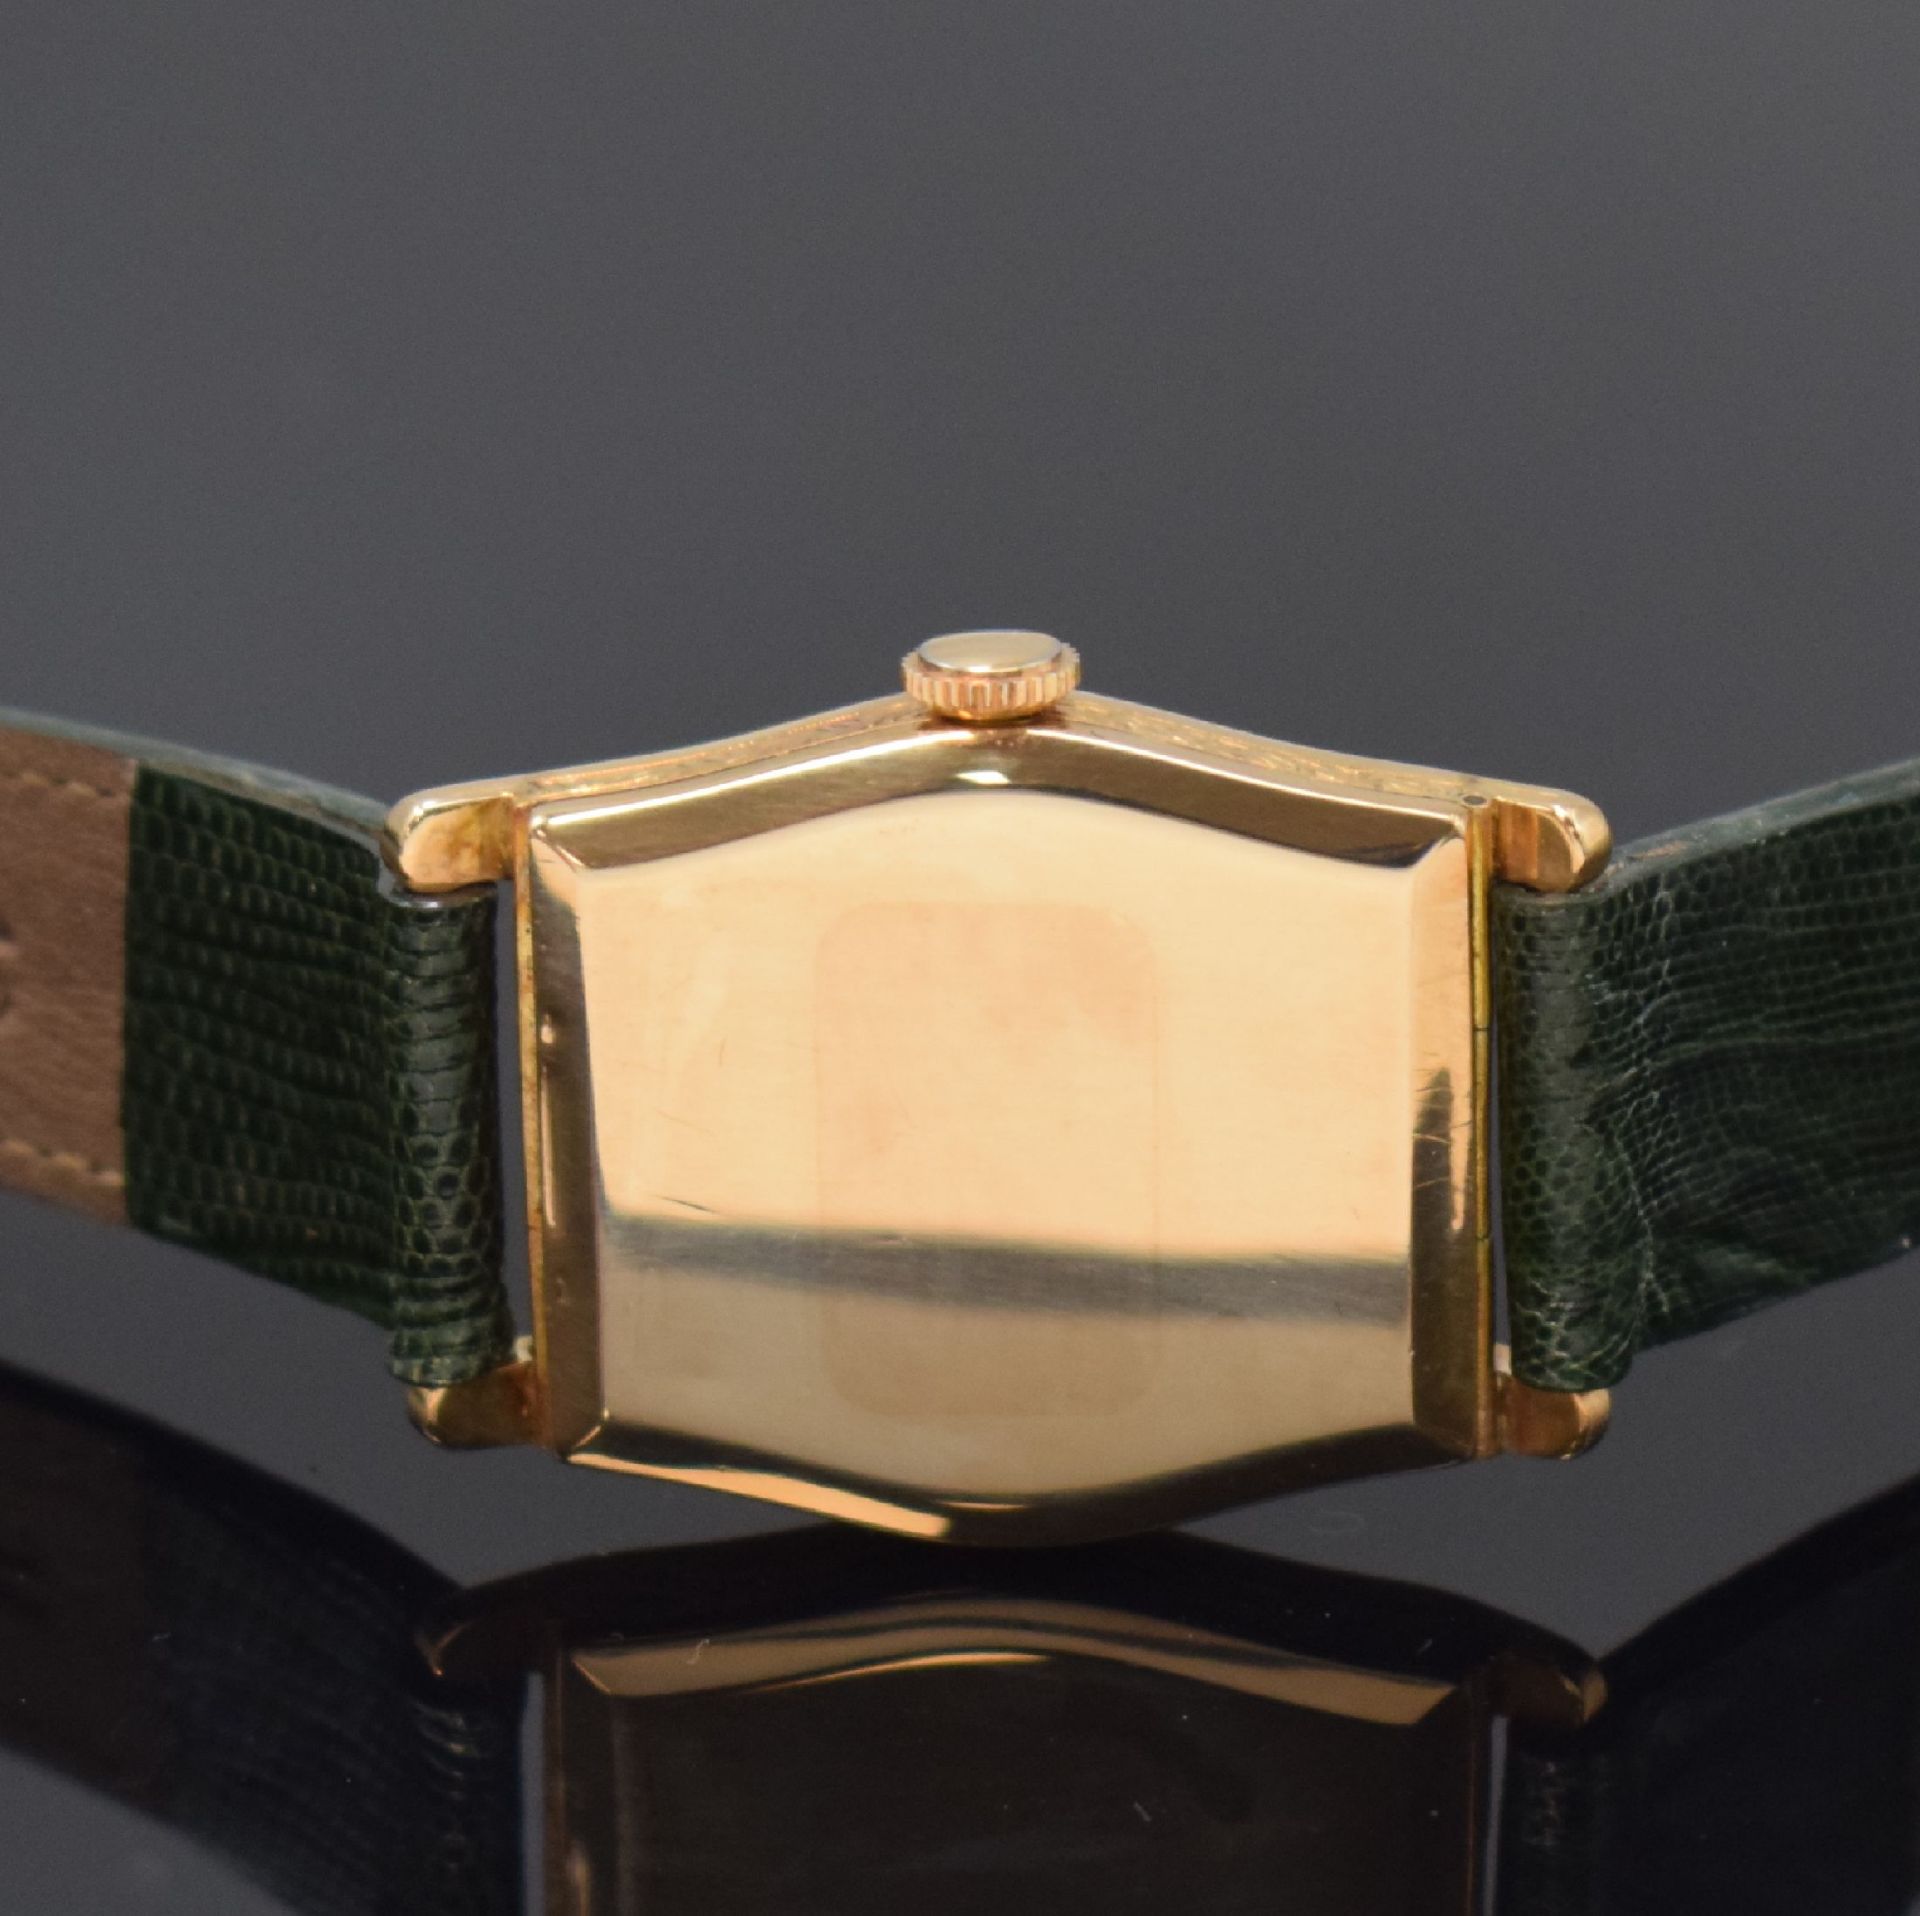 OMEGA frühe Armbanduhr in GG 585/000, Schweiz um 1925, - Image 3 of 6